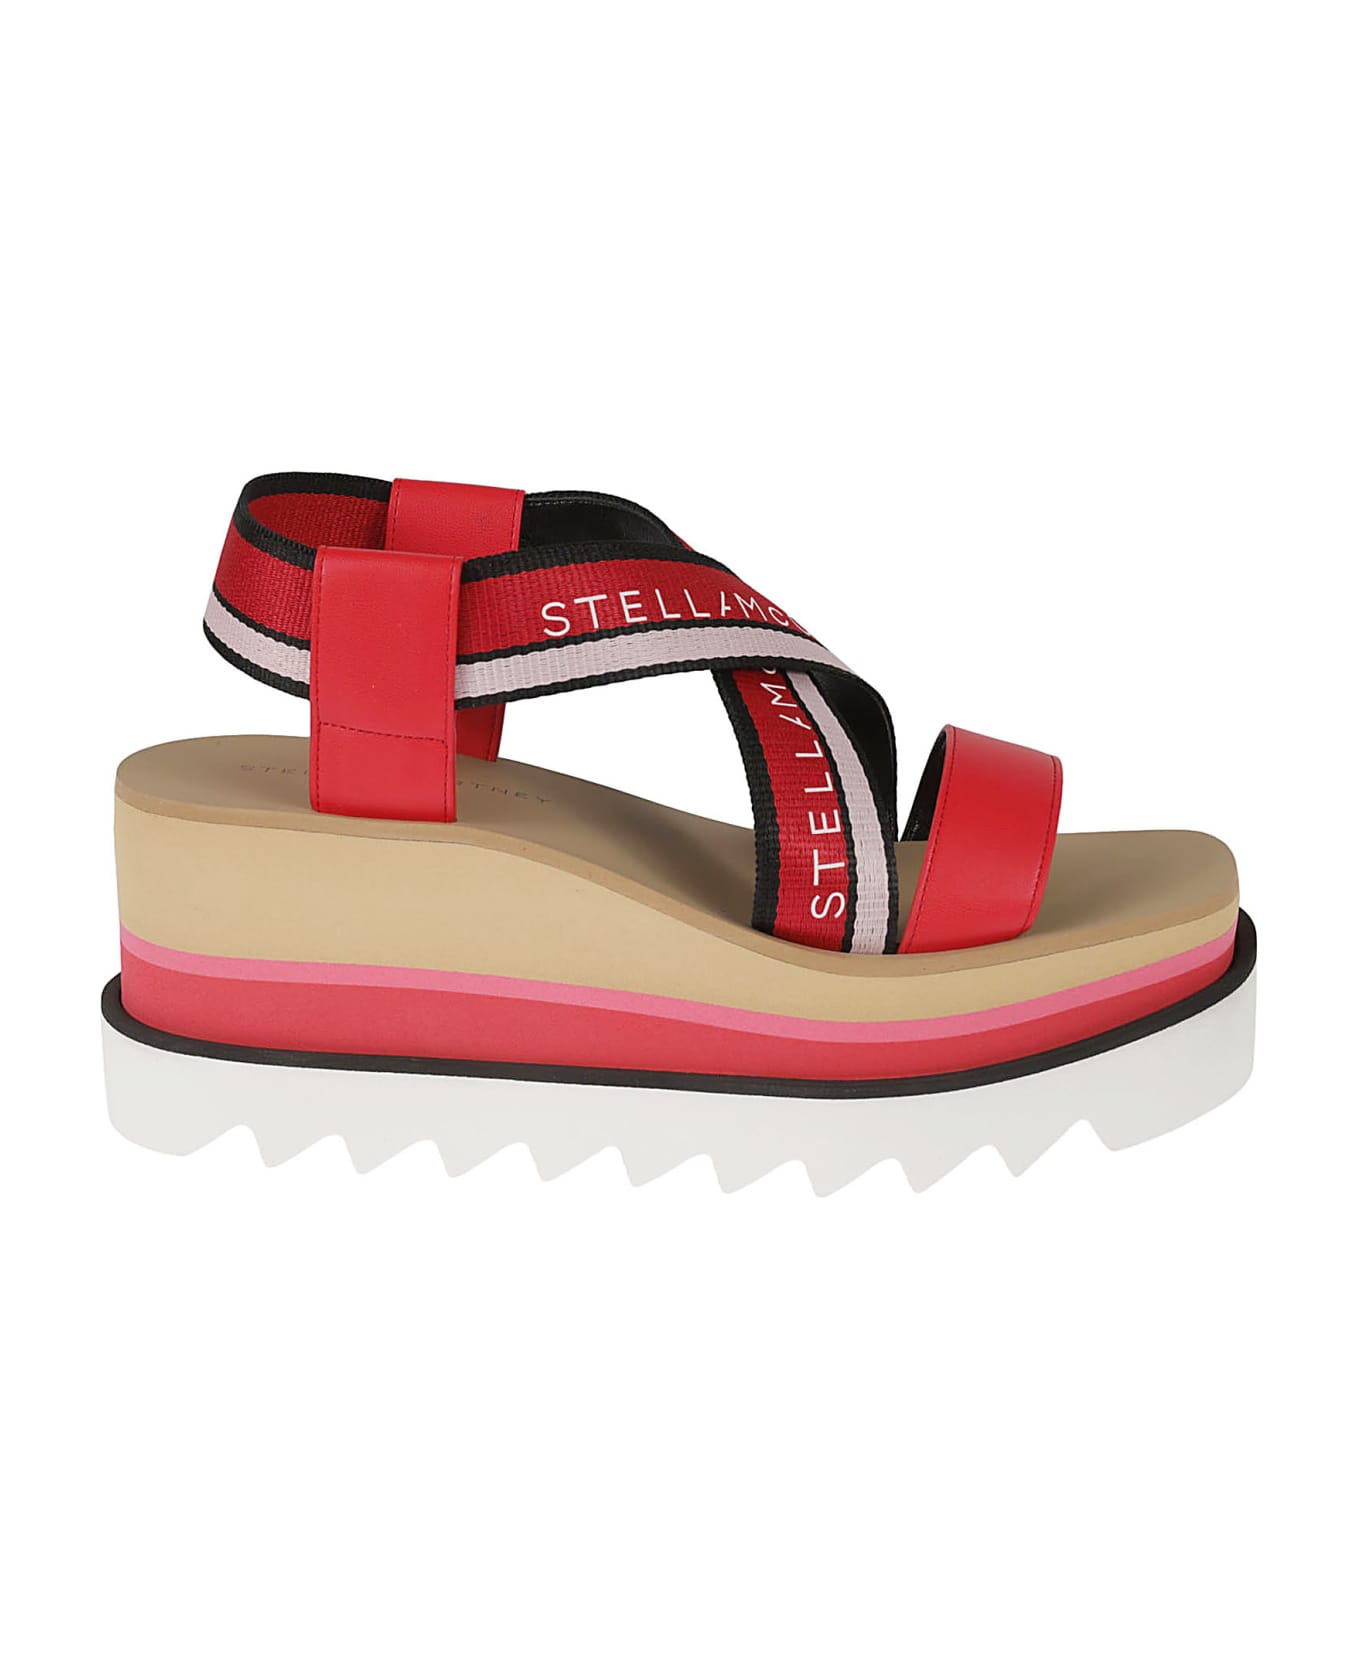 Stella McCartney Webbing Sandals - Red/pink